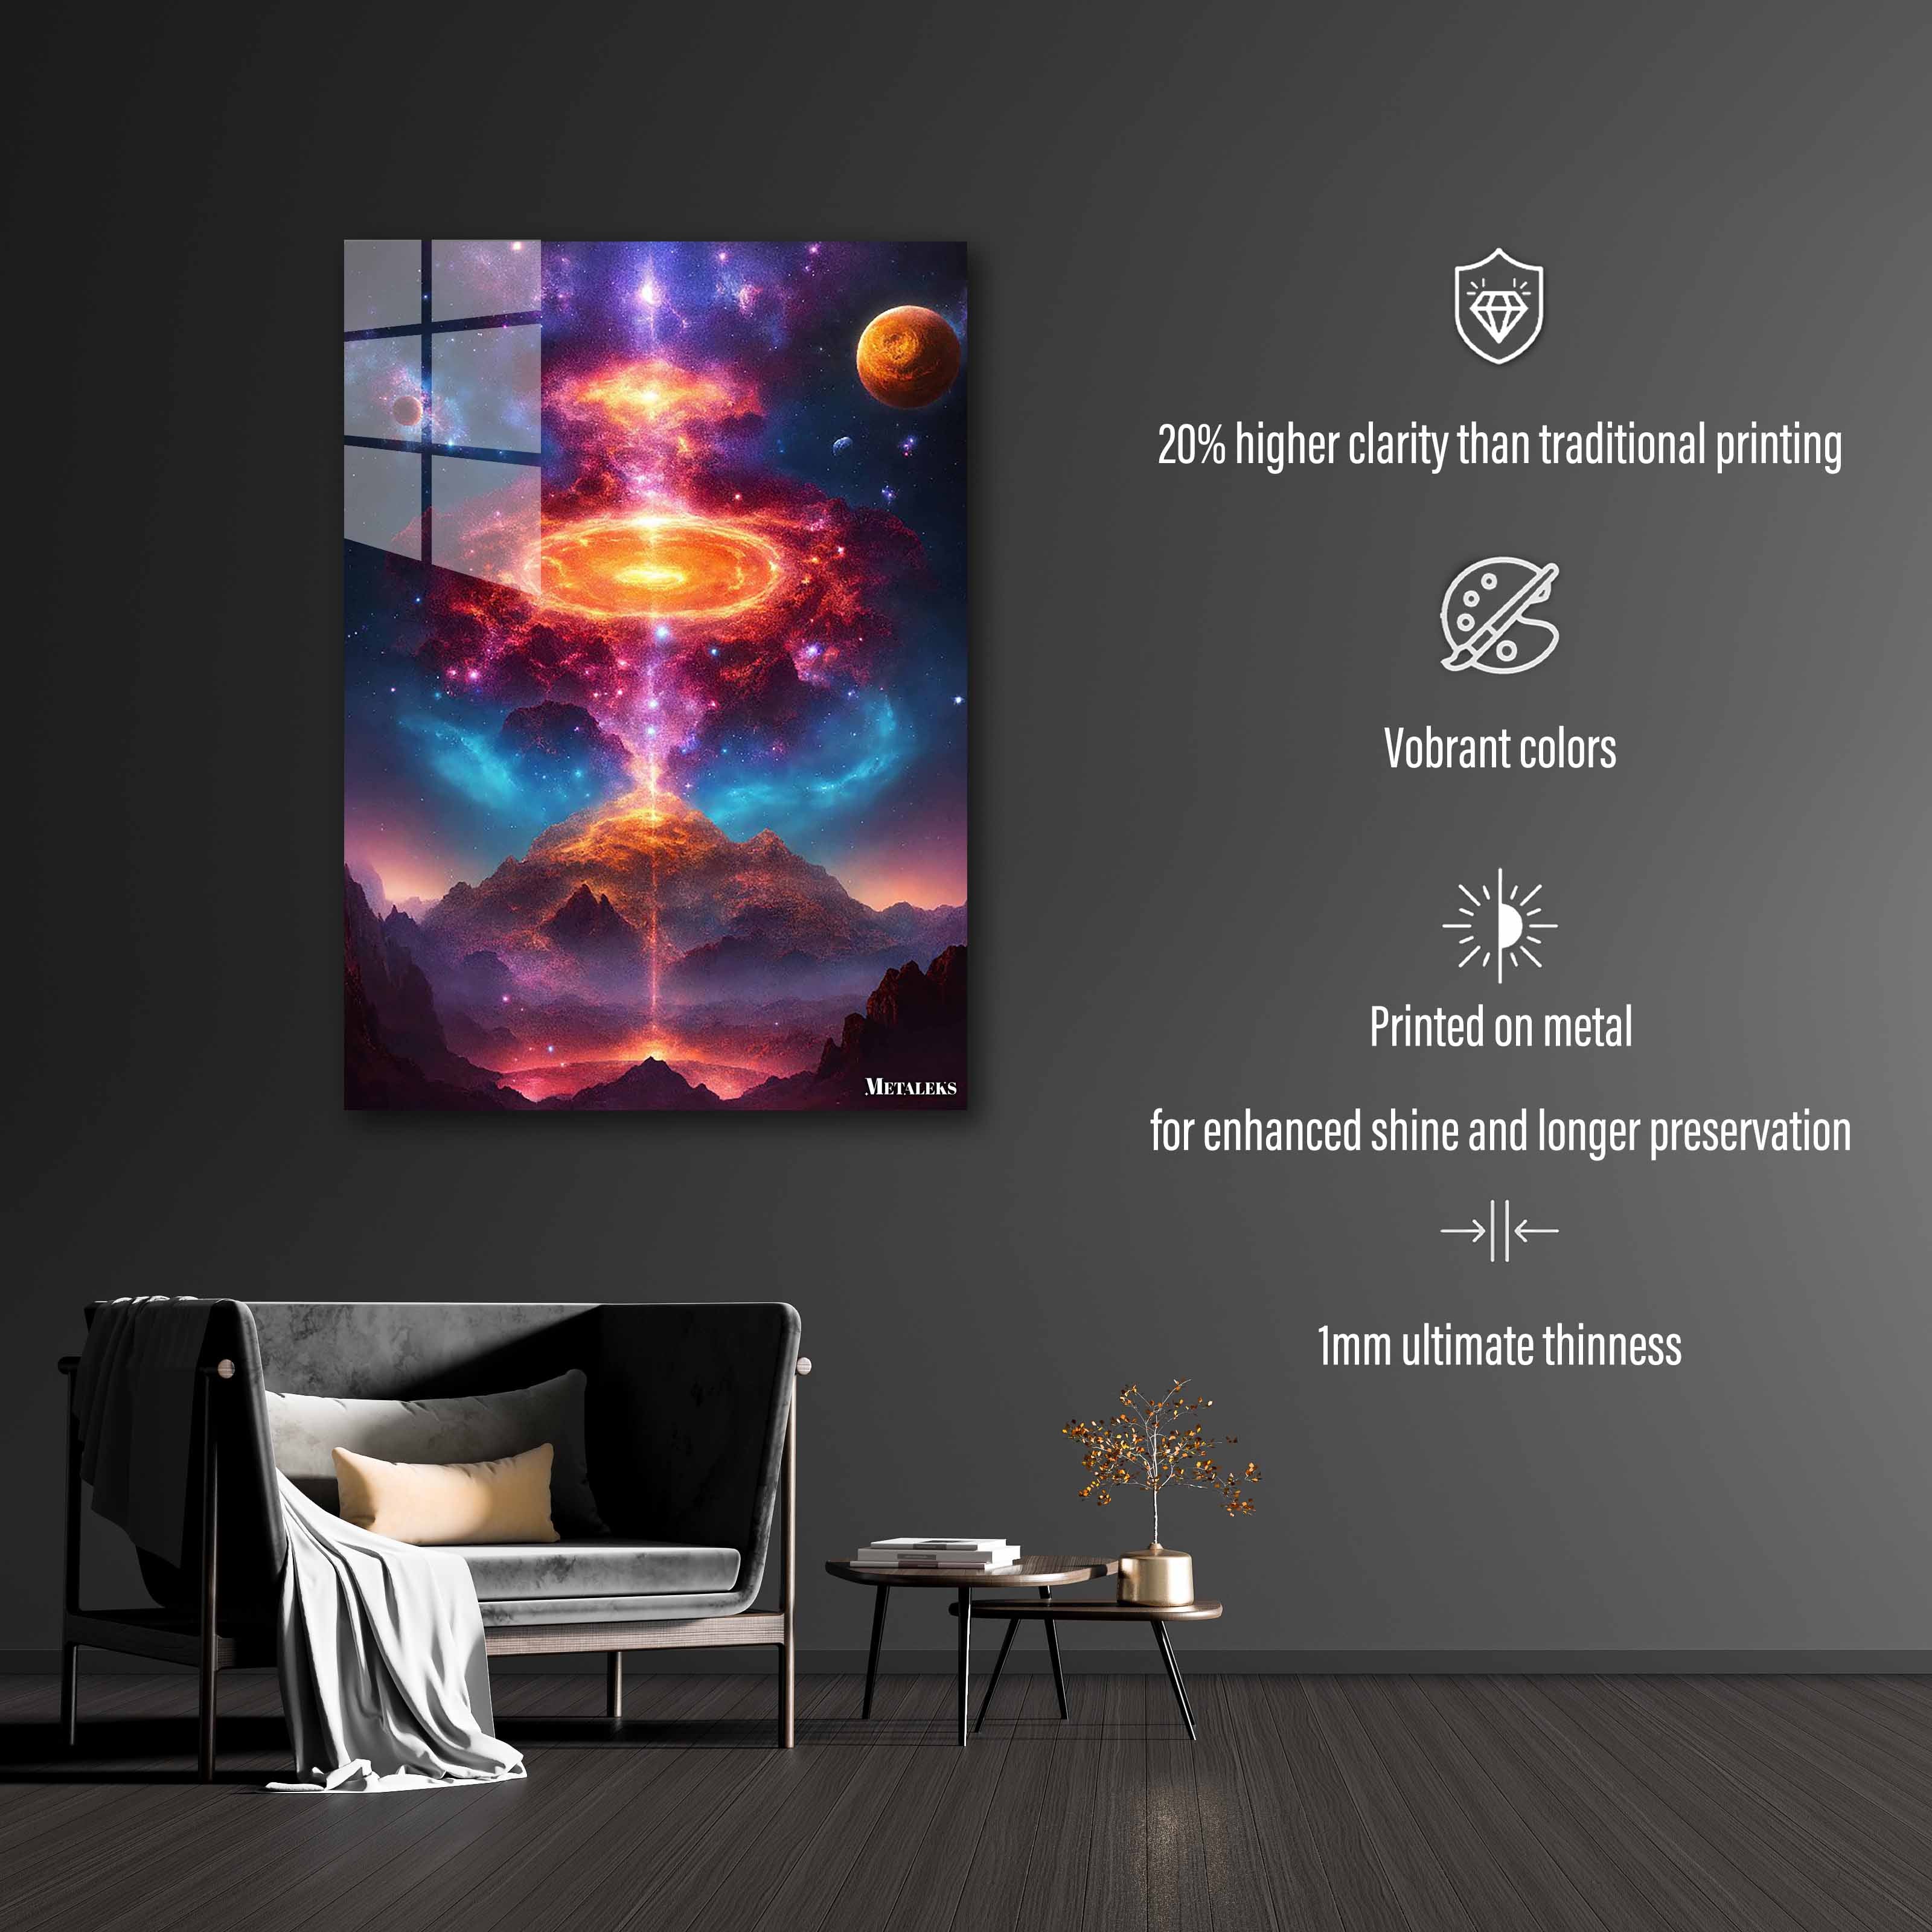 Nebula Lighthing-designed by @Firkins